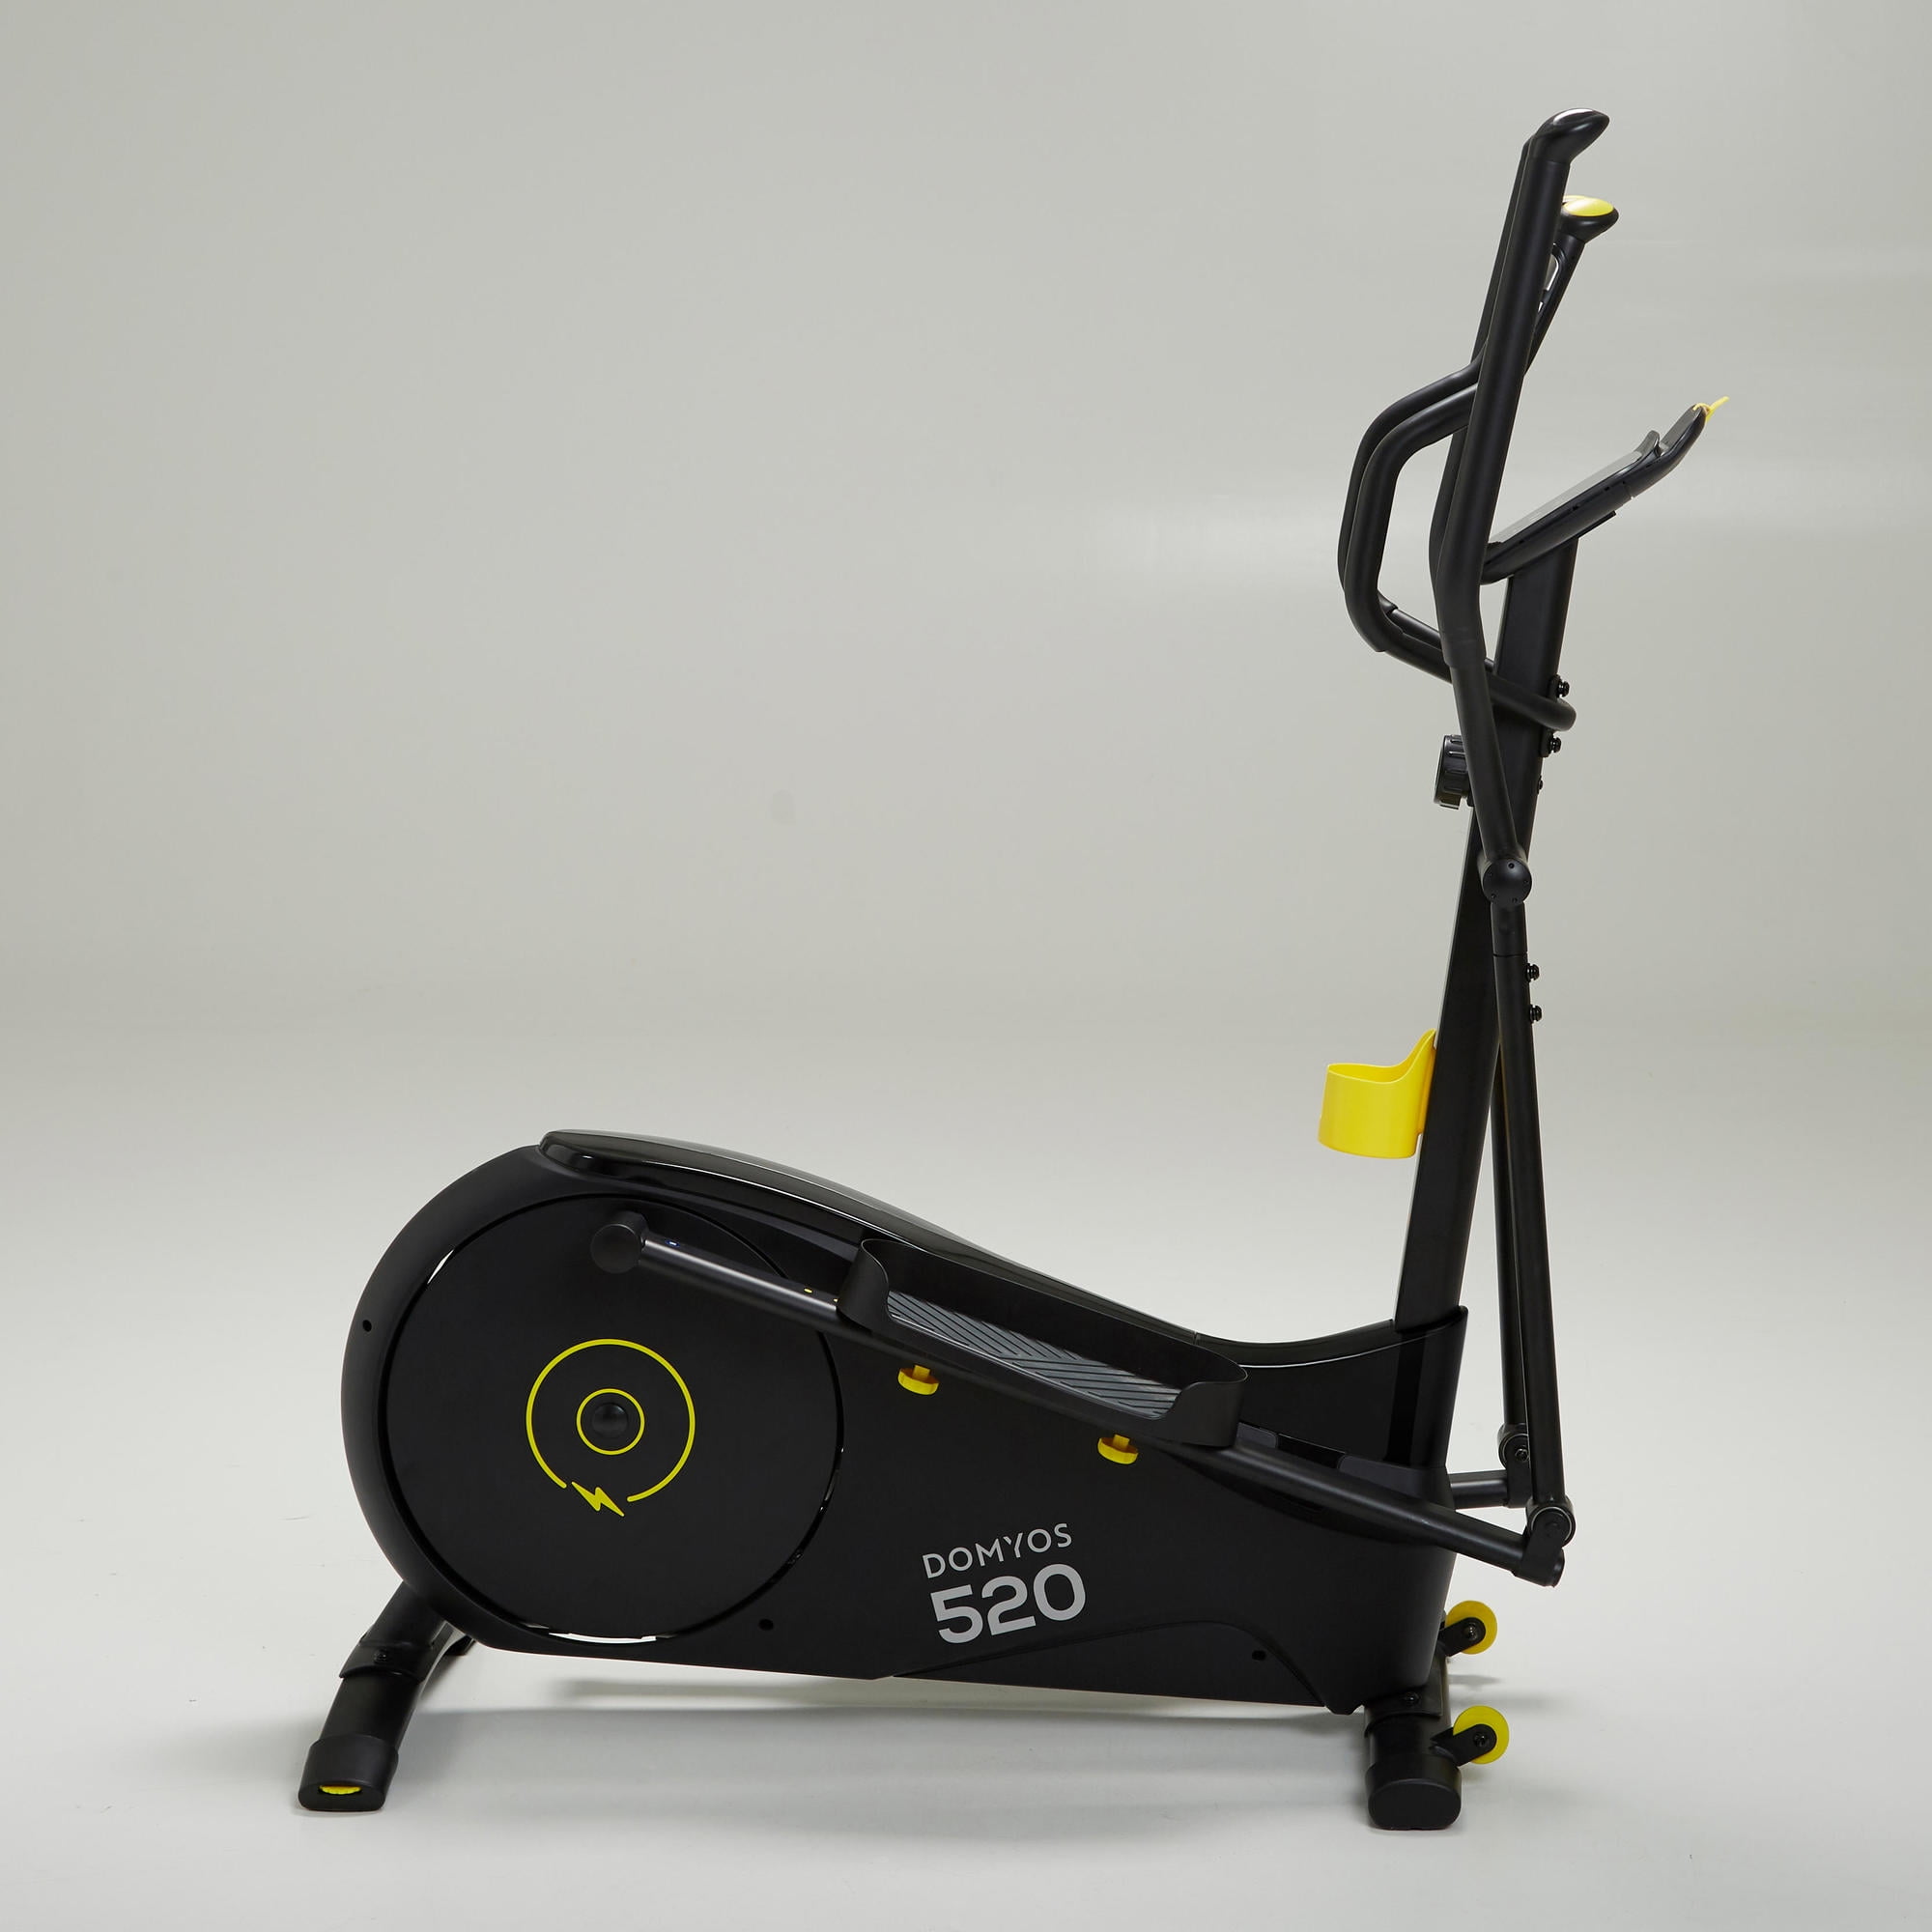 Punctuality Swipe Ringlet Decathlon - Domyos EL520, Self-Powered Exercise Fitness Elliptical -  Walmart.com